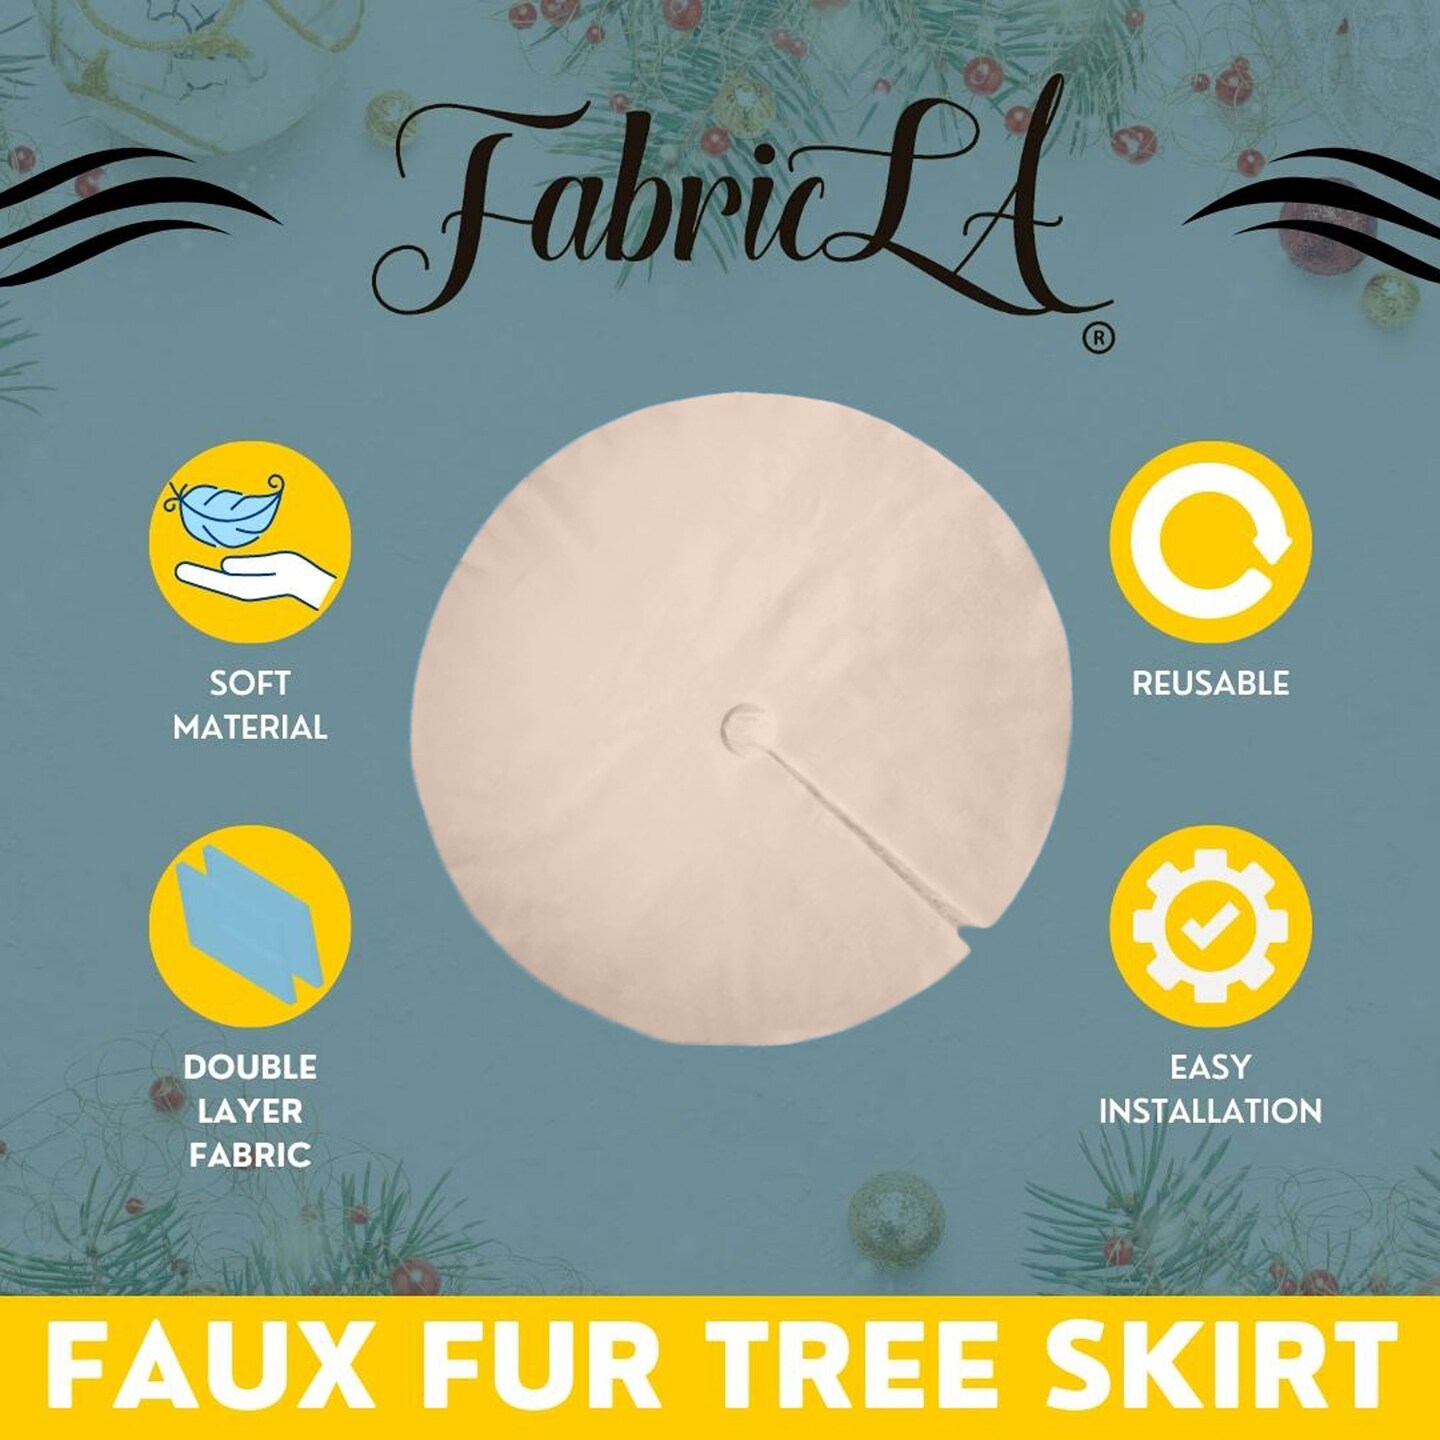 36&#x22; Latte Faux Fur Christmas Tree Skirt - Fluffy Plush Tree Skirt (91cm) for Holiday Decorations (FabricLA)